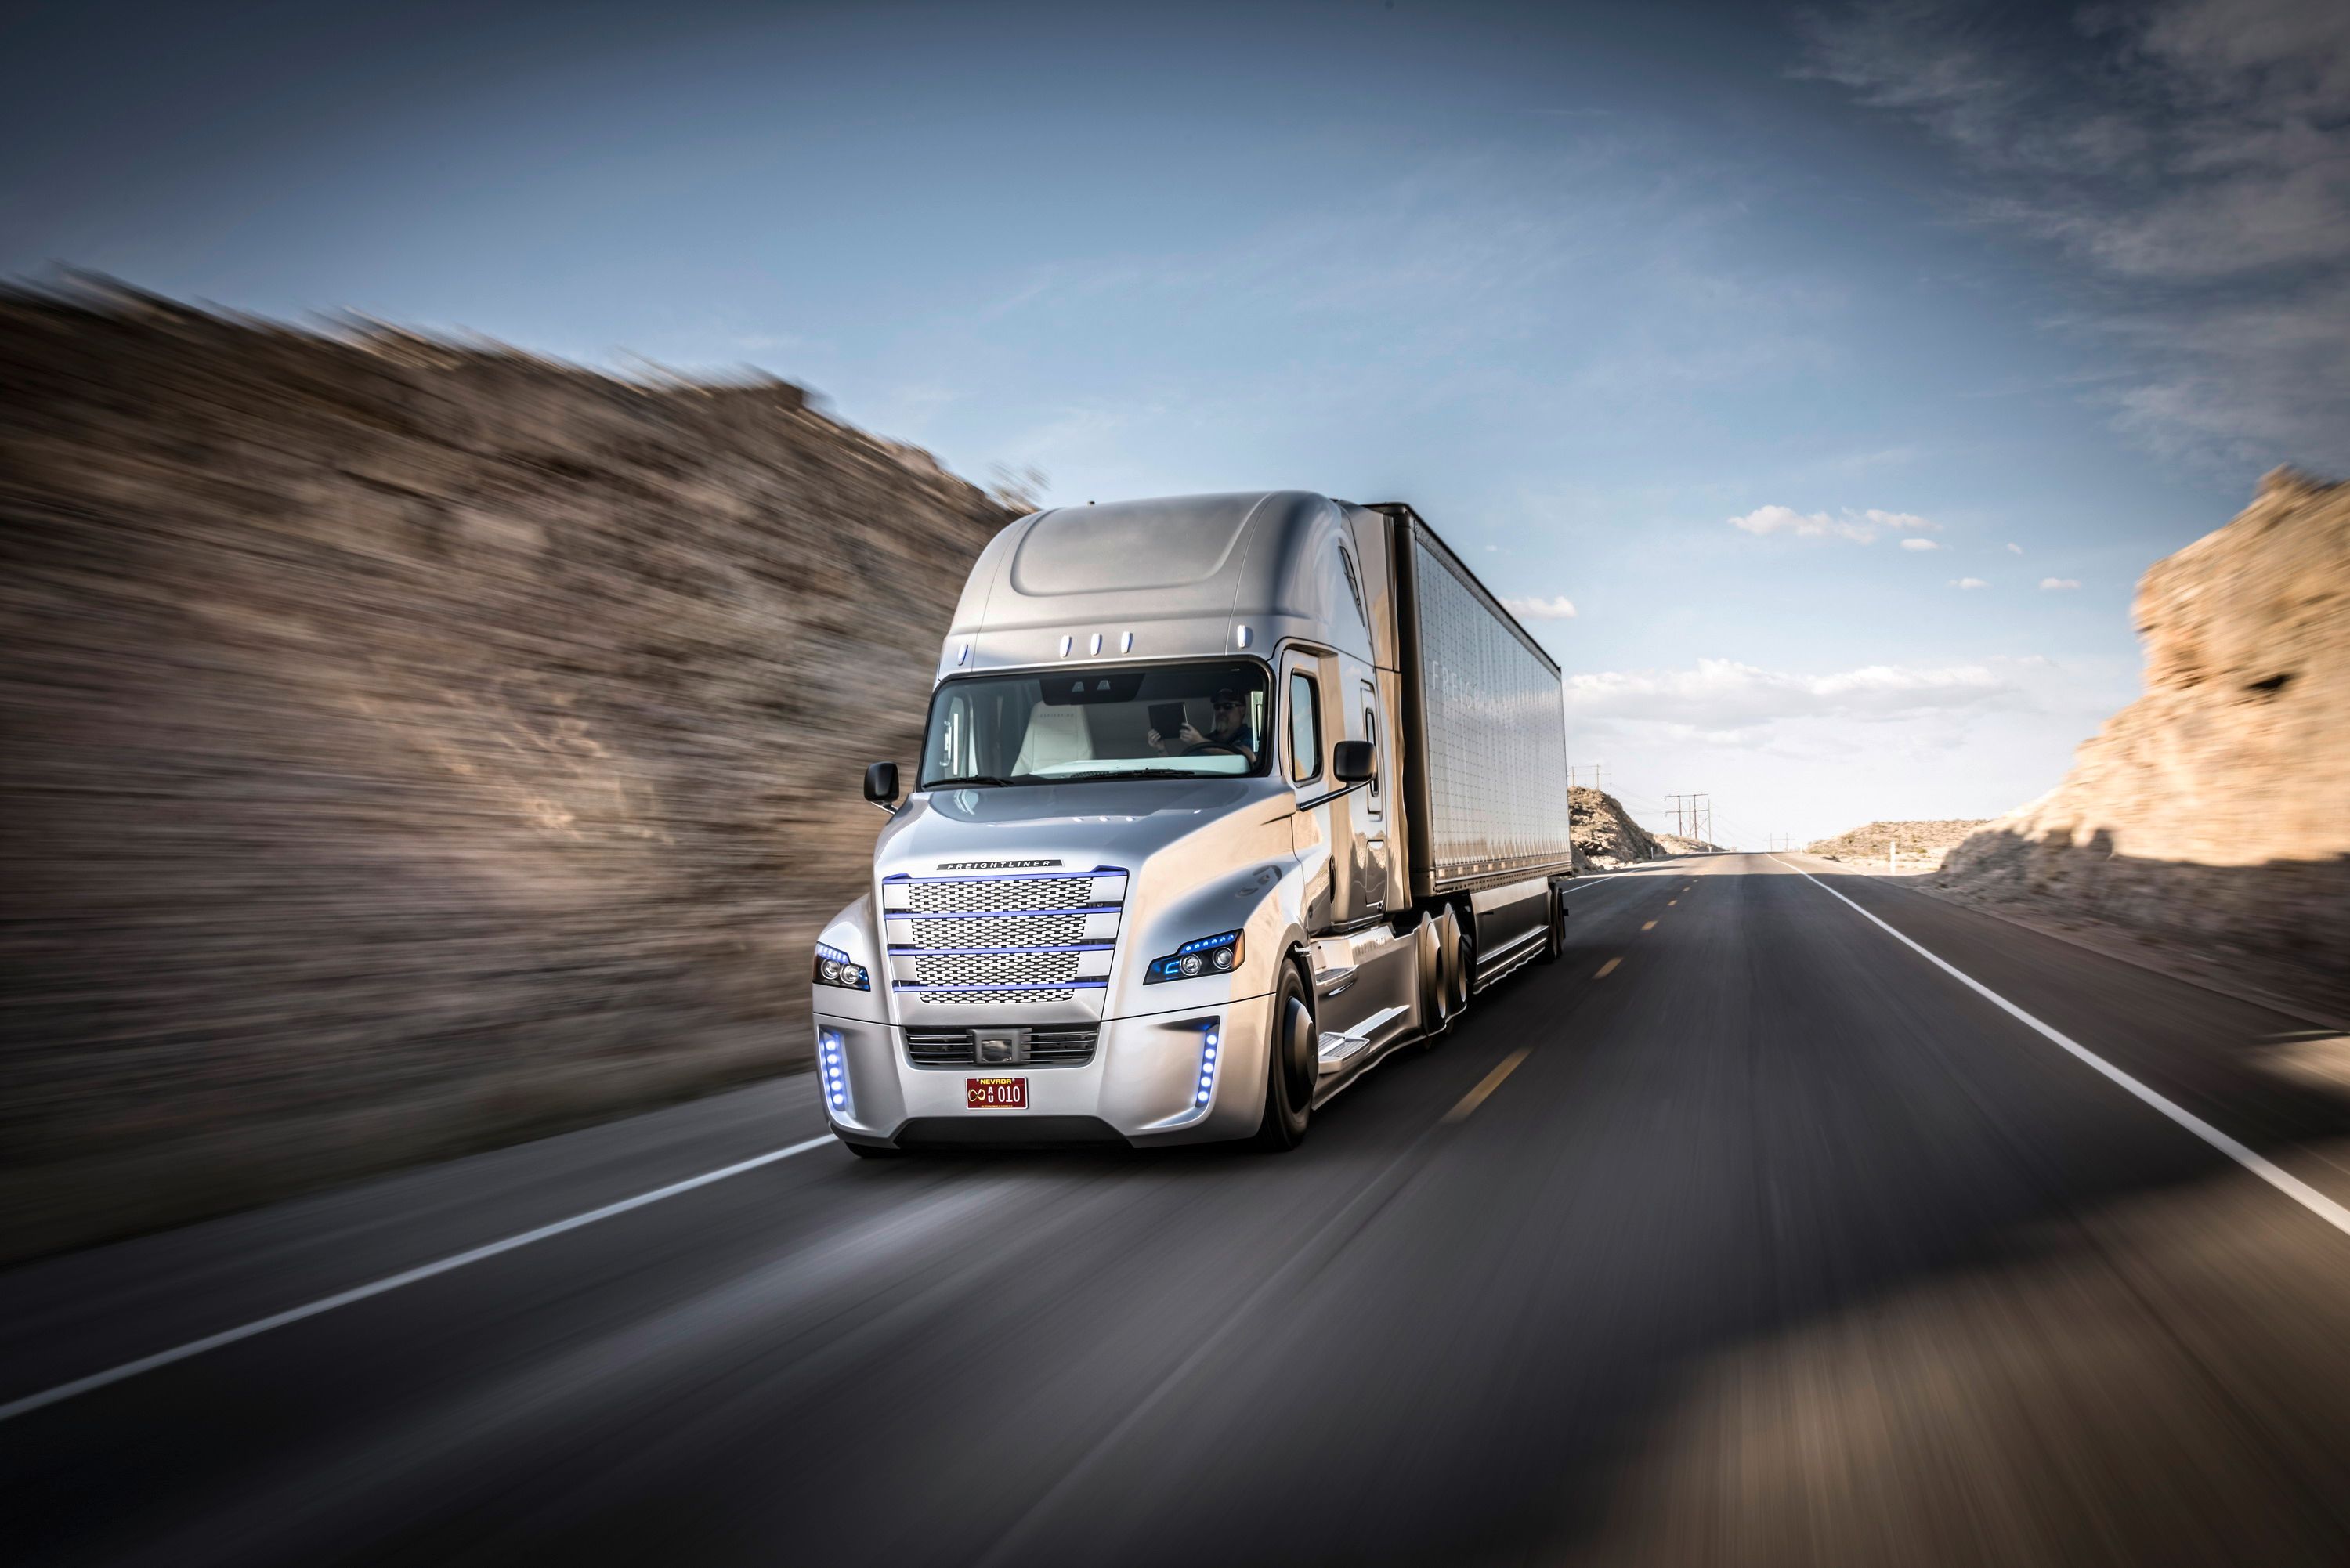 2015 Freightliner Inspiration Truck